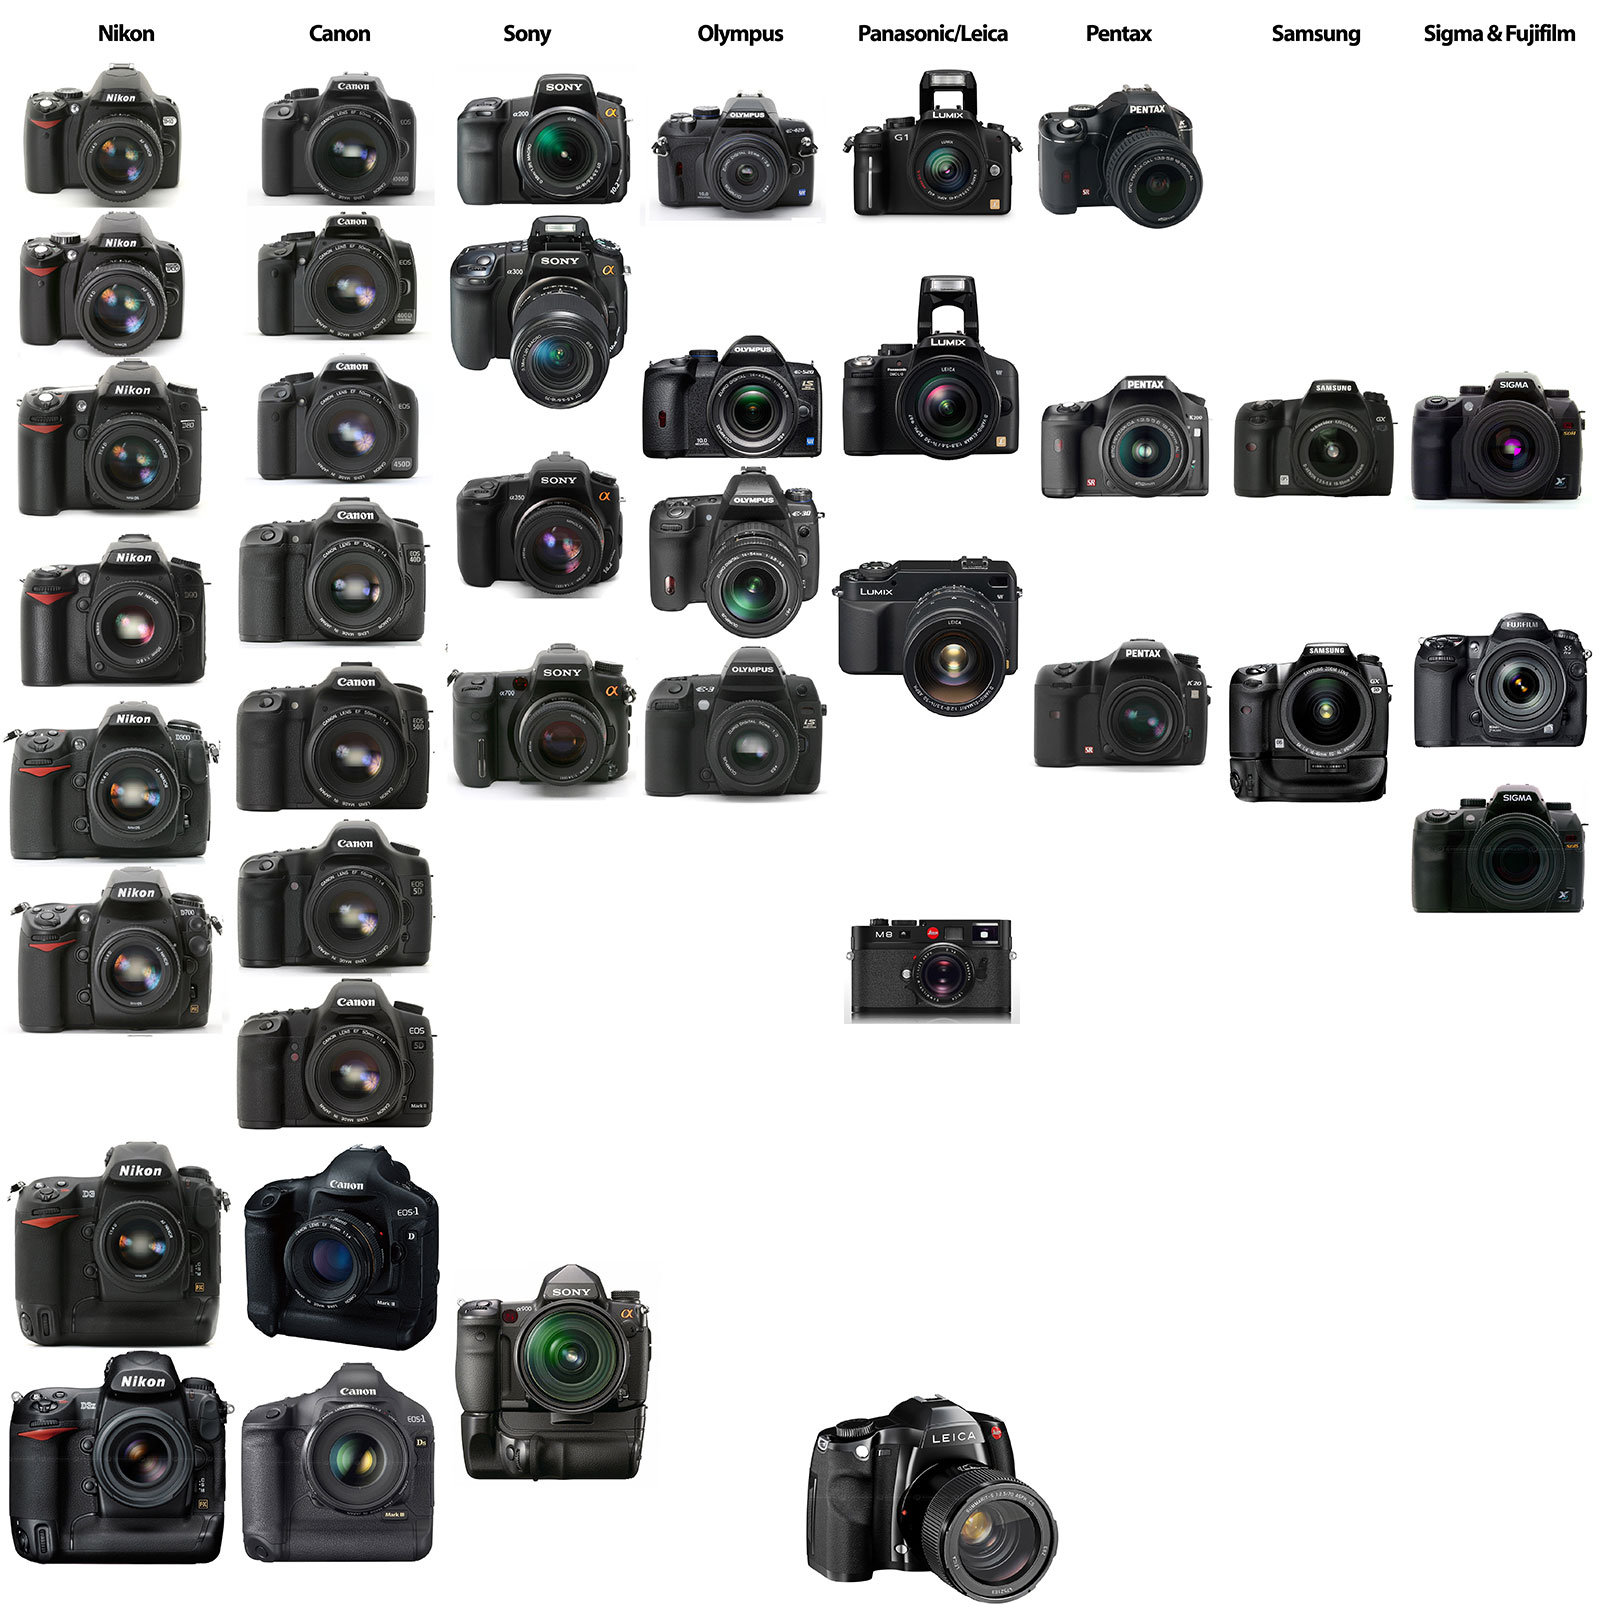 Choosing a DSLR camera